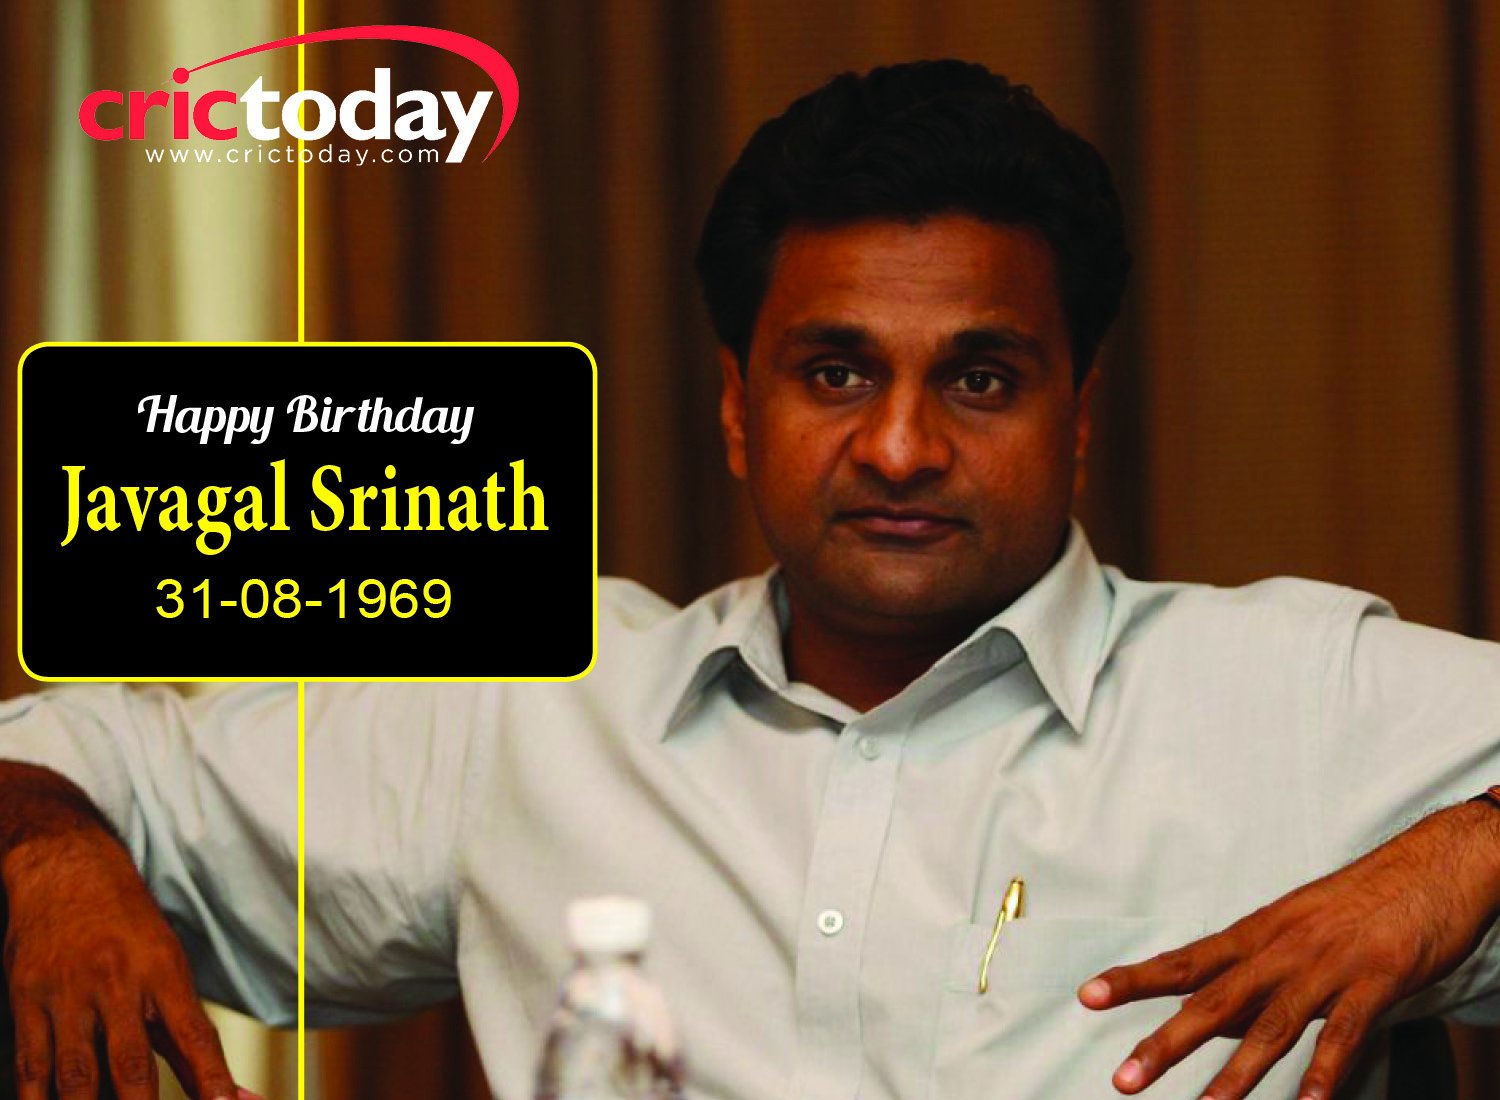  Happy Birthday Javagal Srinath 